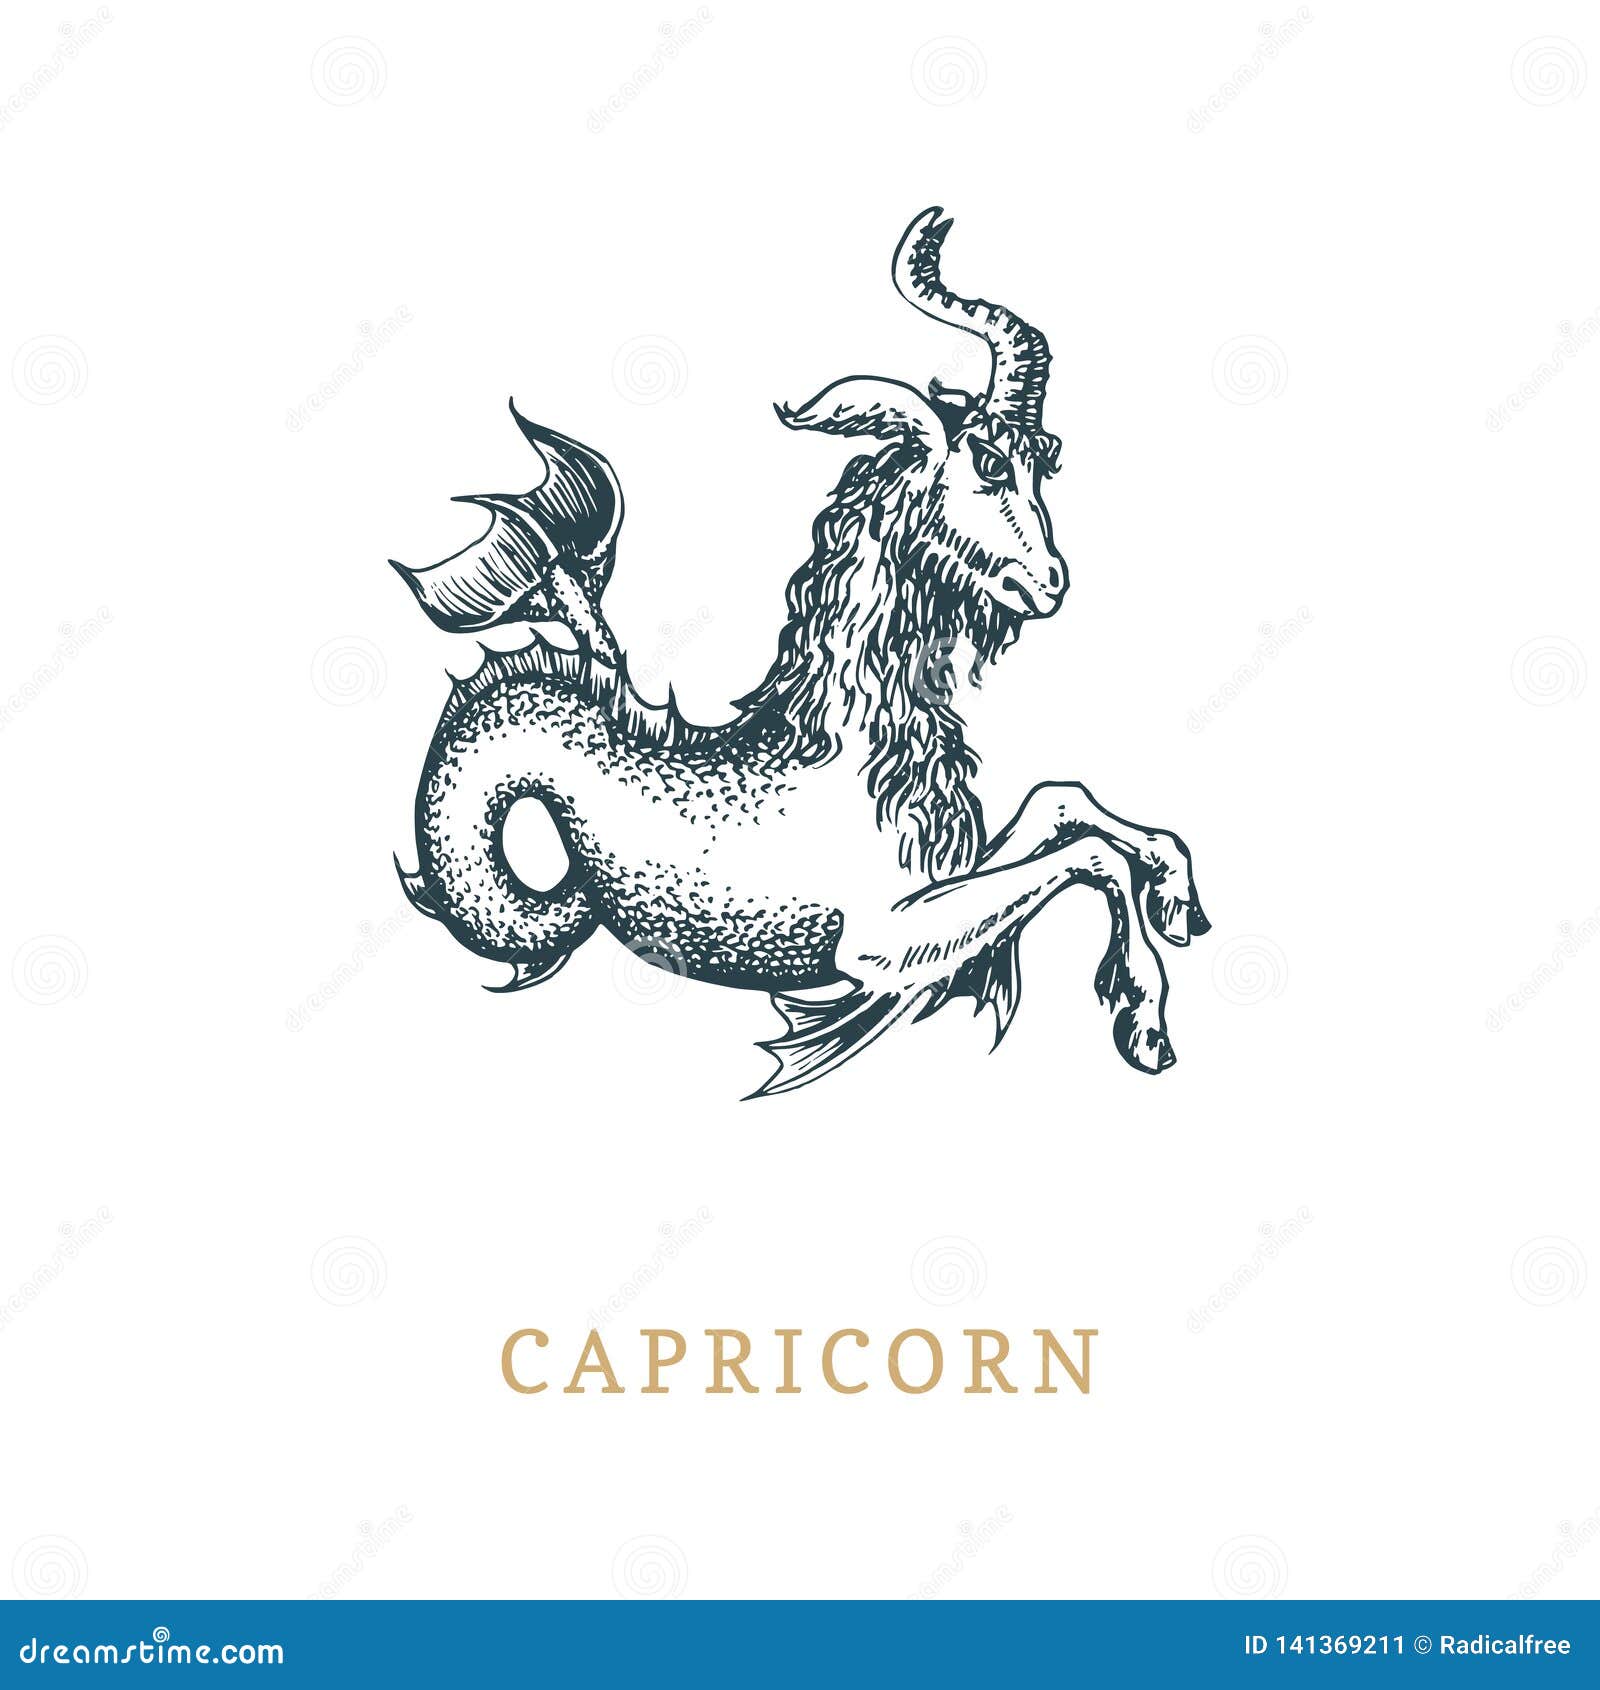 Capricorn The Sea Goat Star Sign Vector Illustration | CartoonDealer ...